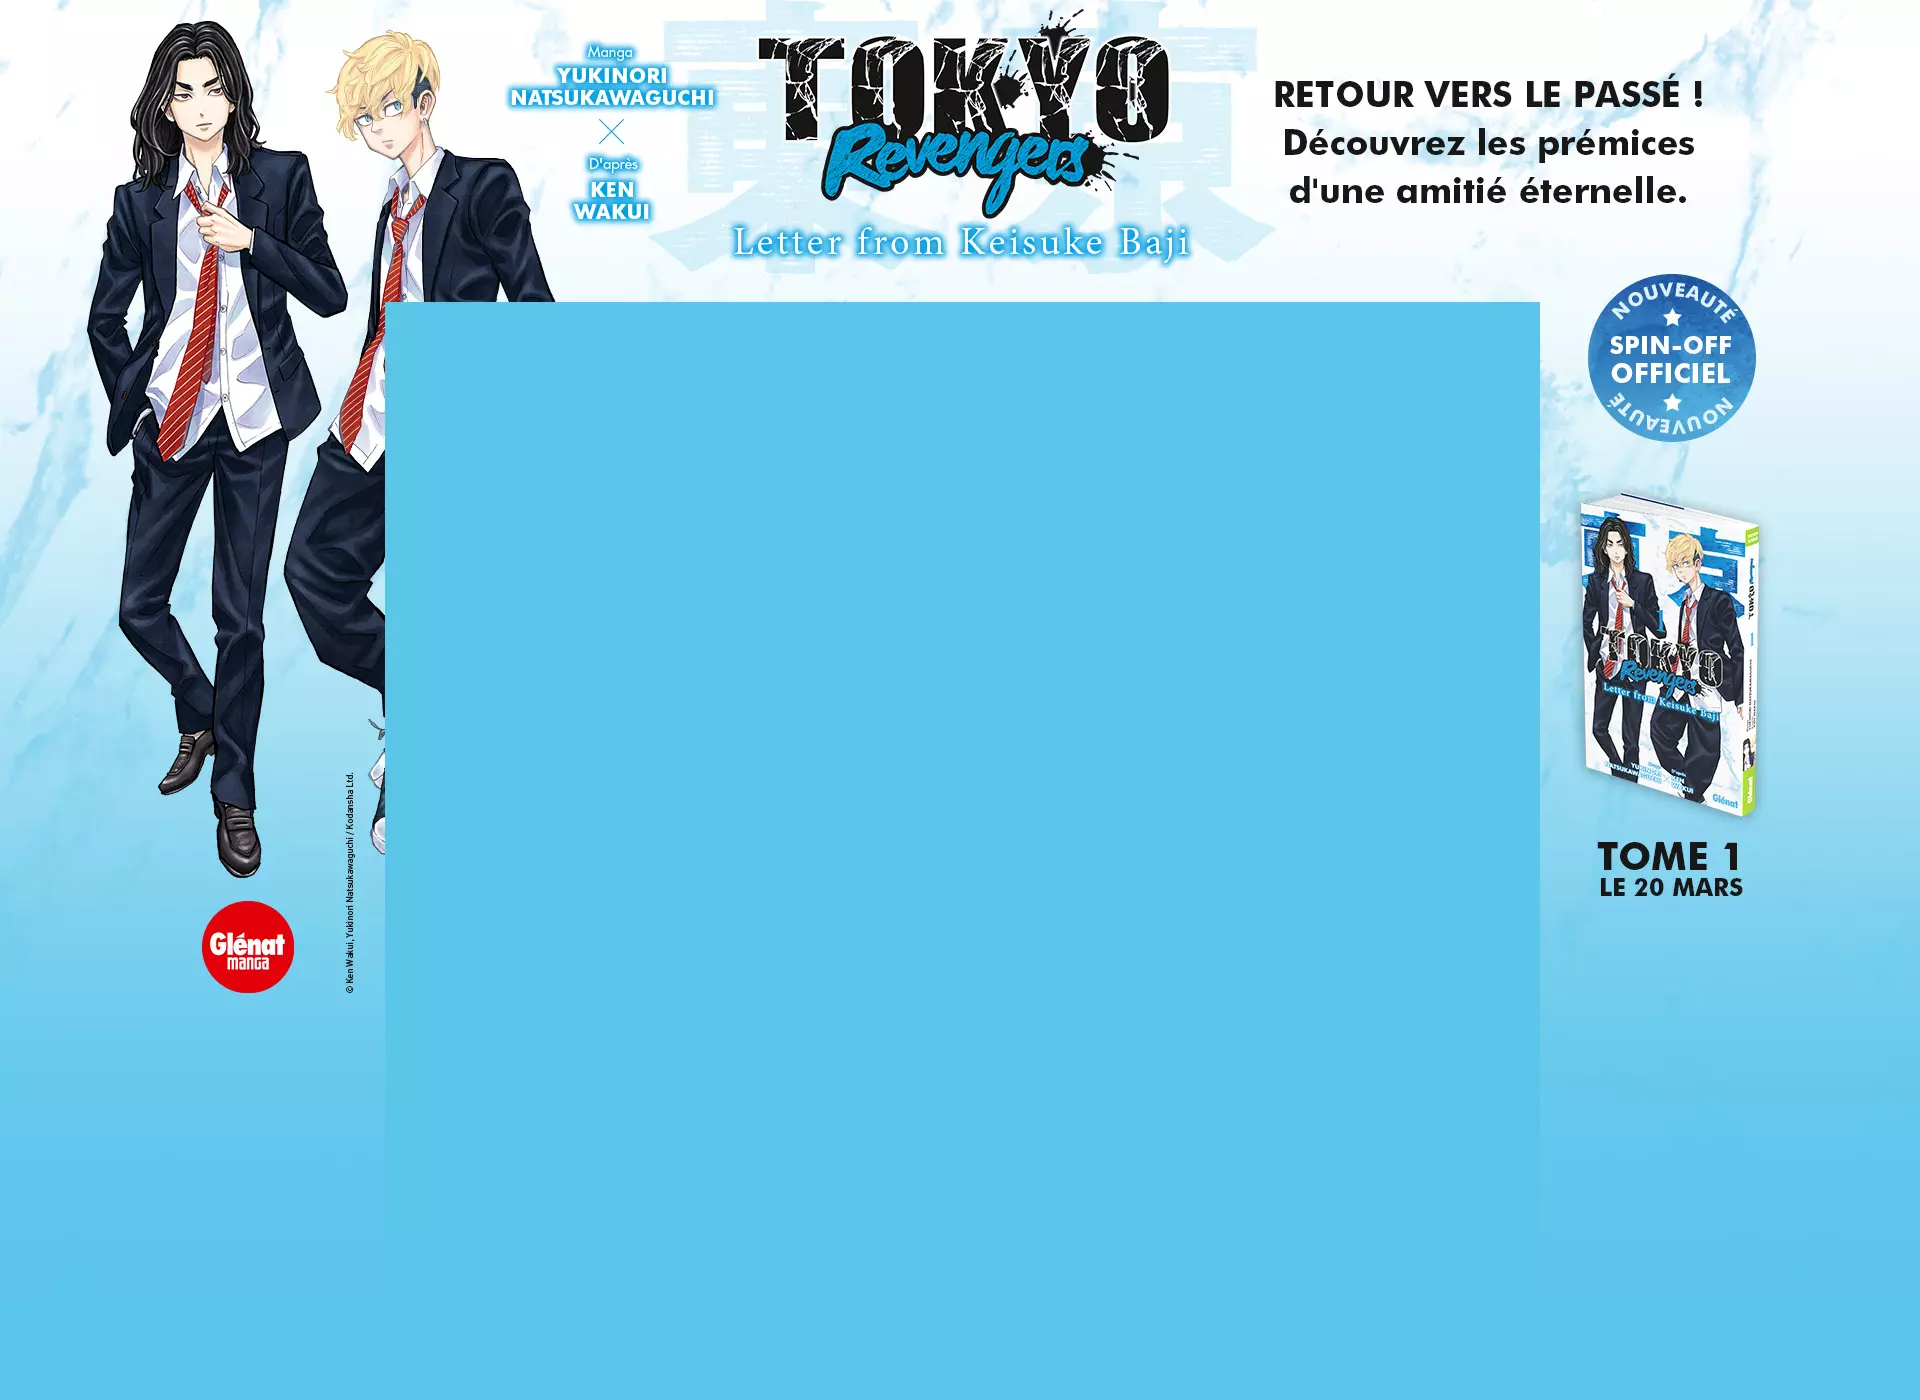 Le film live de Terra Formars en DVD & Blu-ray chez Kazé- Actus manga